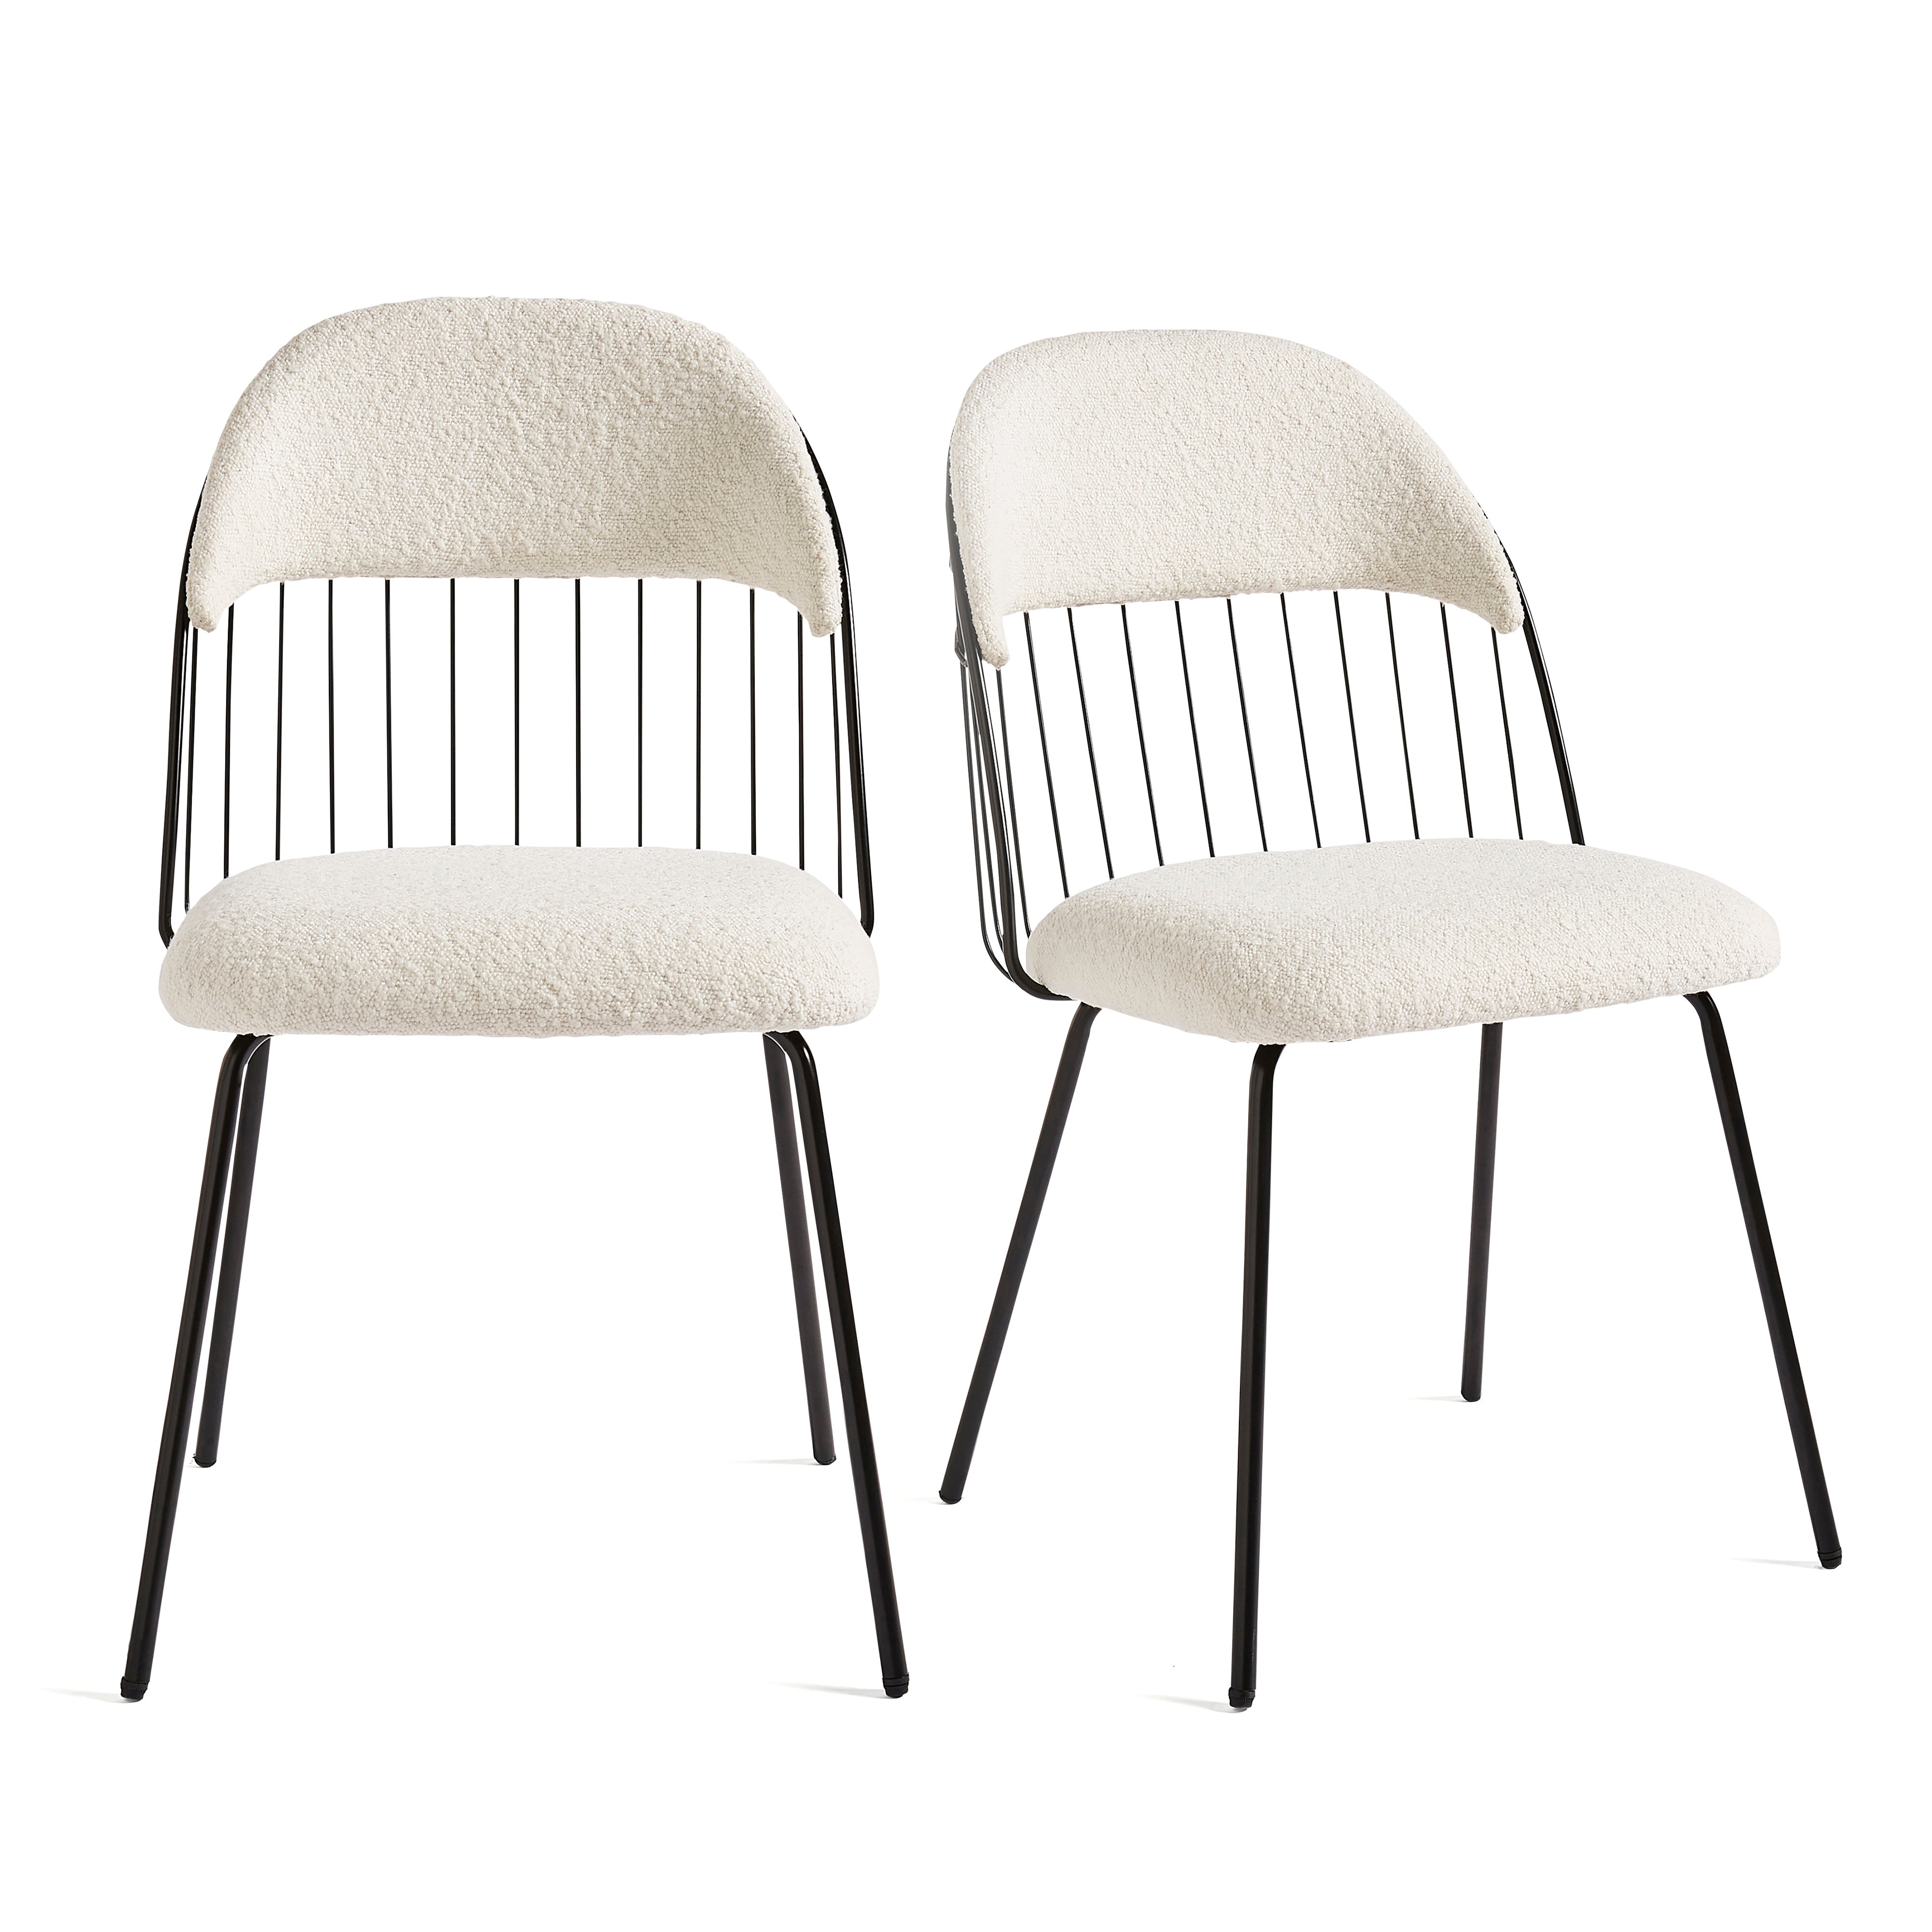 Marcela Set of 2 Chairs, Ivory Boucle | Dunelm